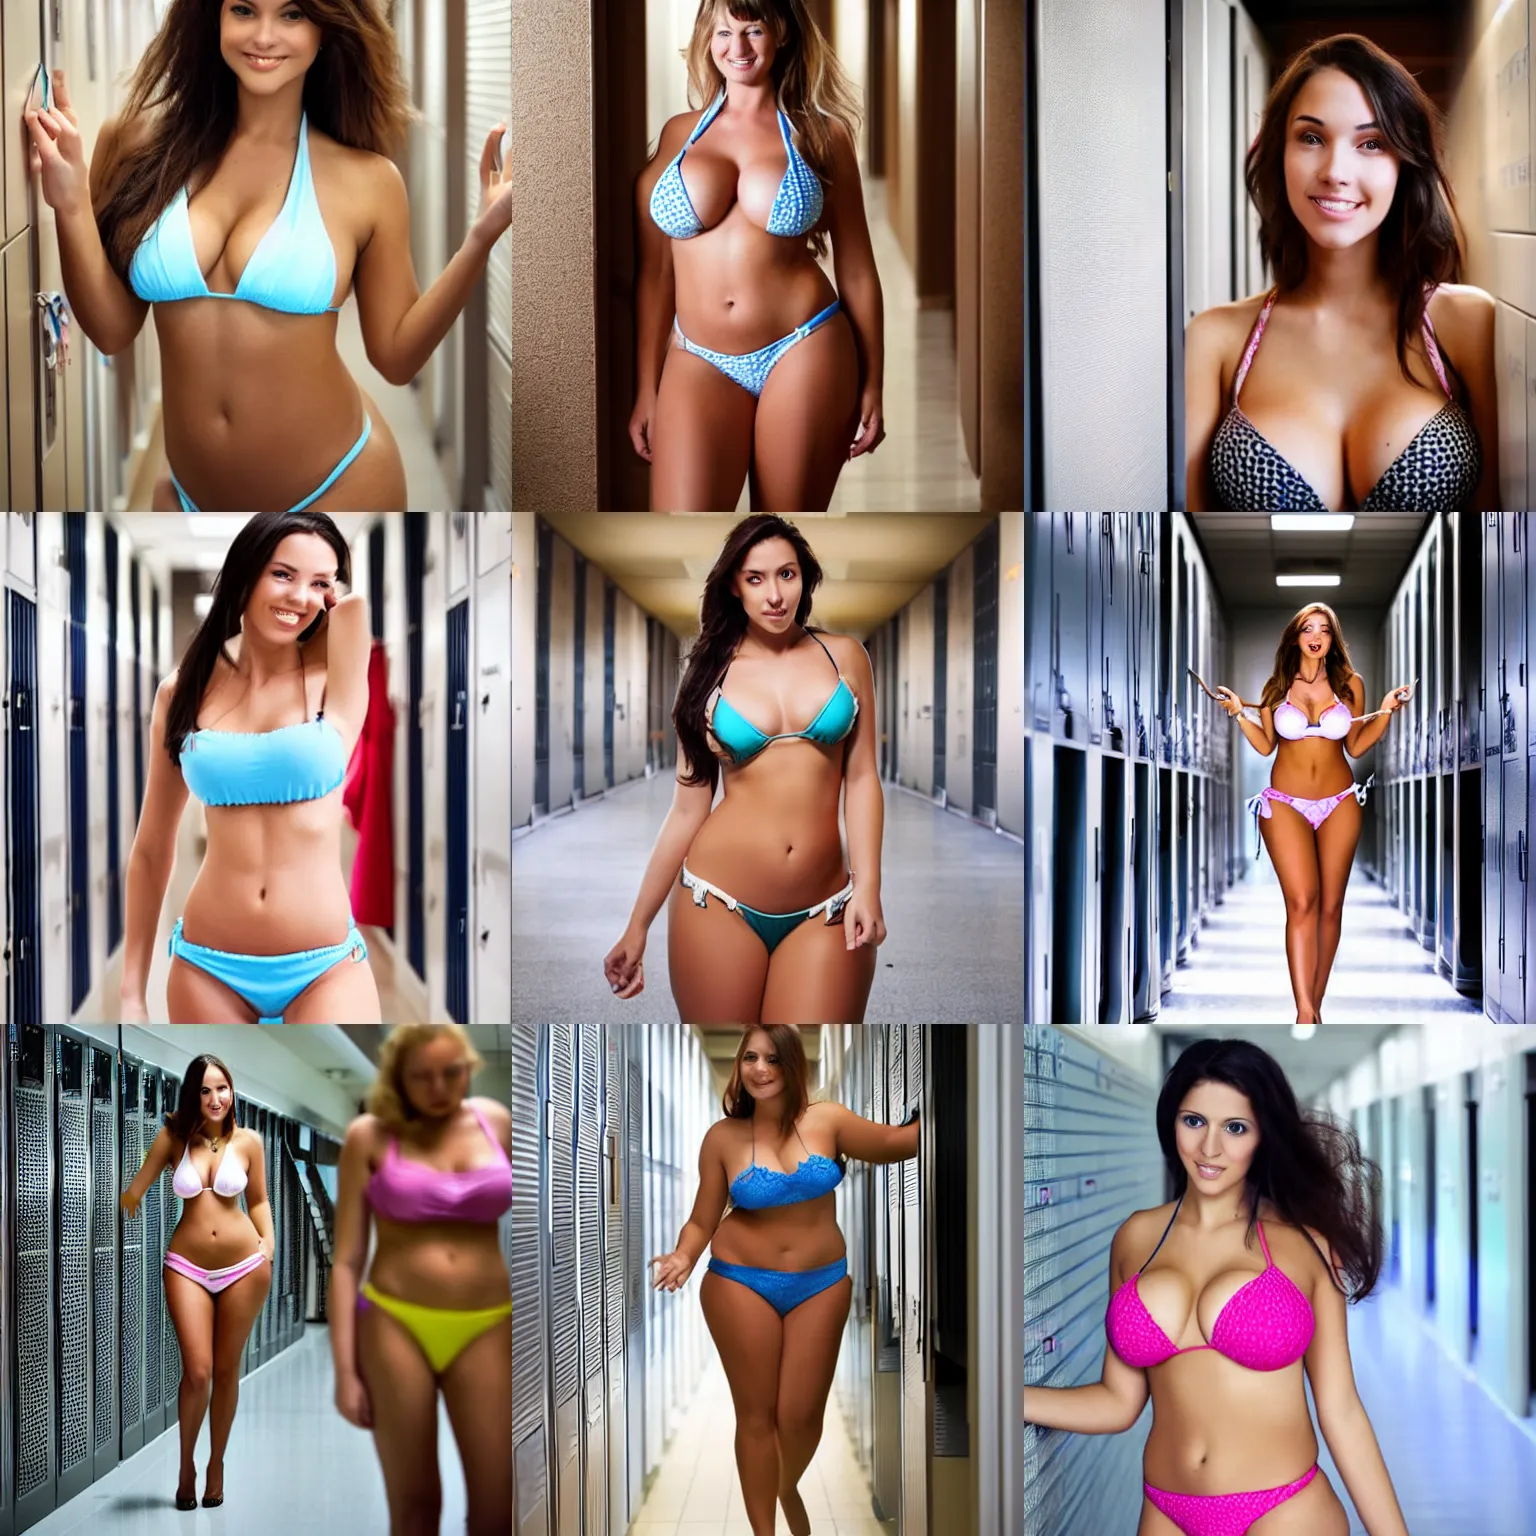 Prompt: a beautiful woman in bikini with big breasts in the hallway of a school, lockers